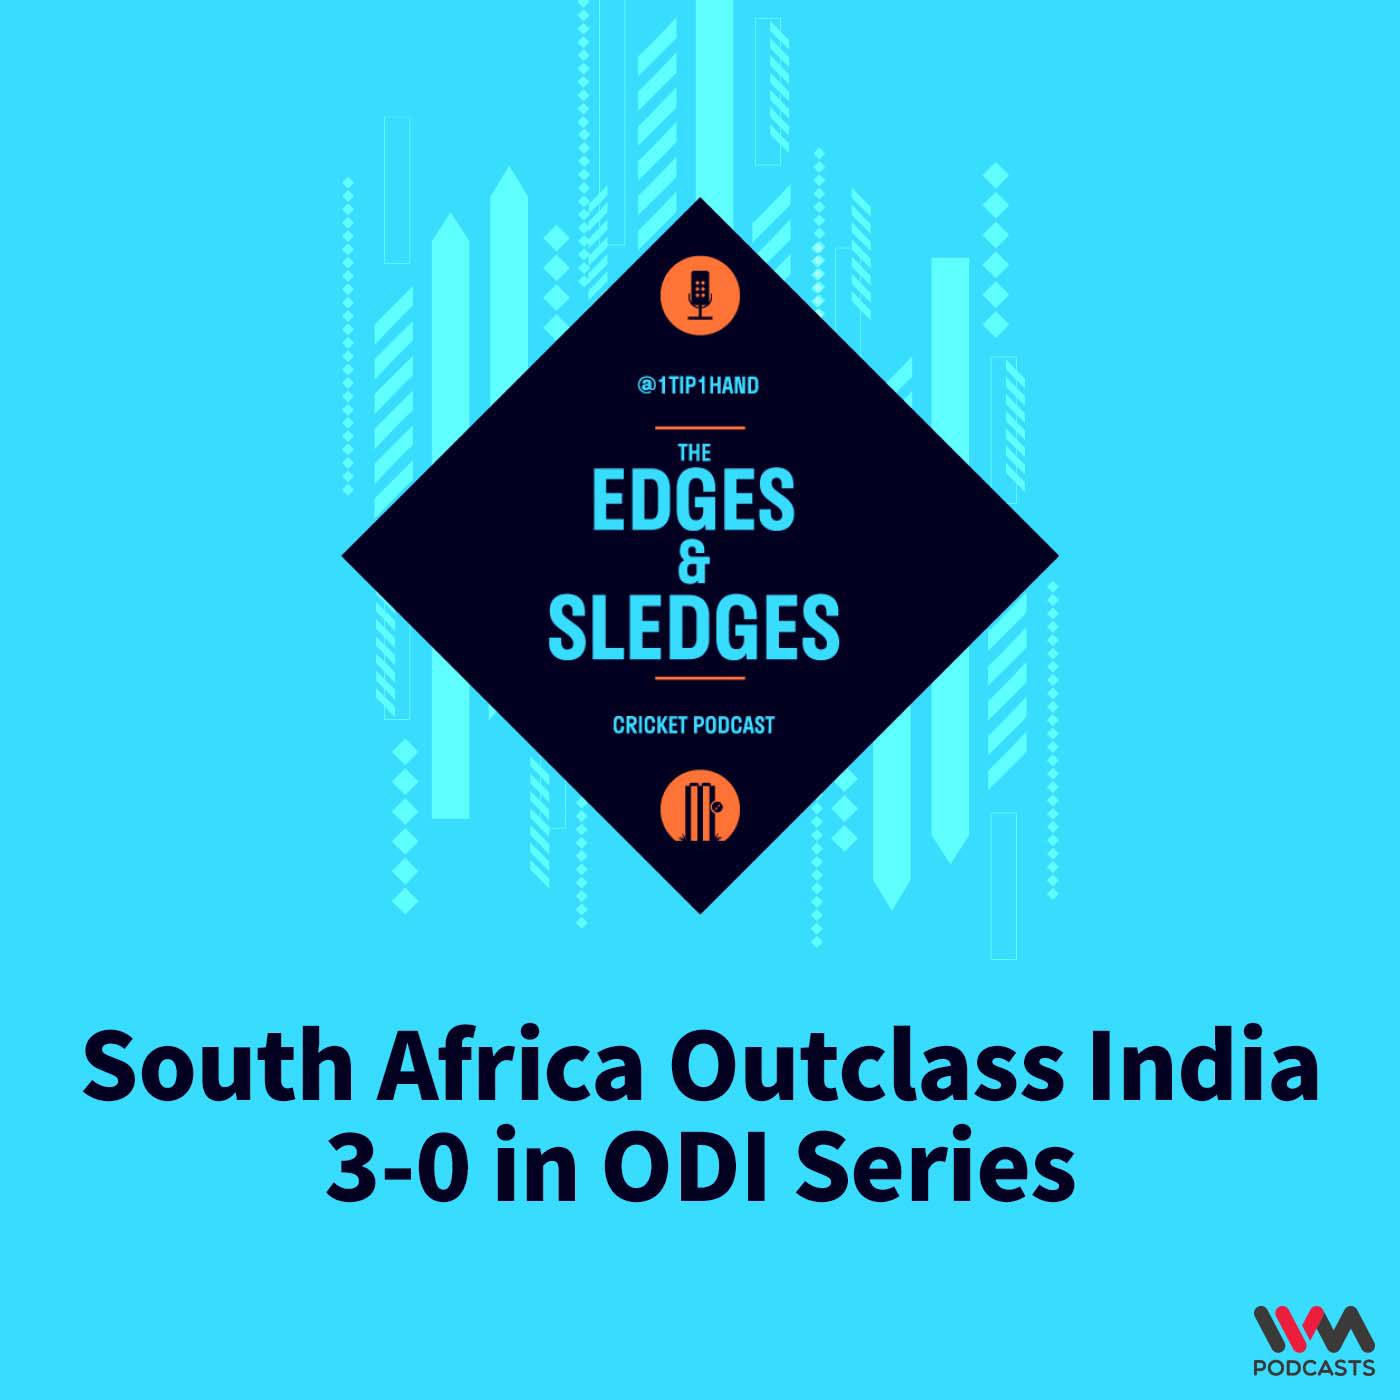 South Africa Outclass India 3-0 in ODI Series